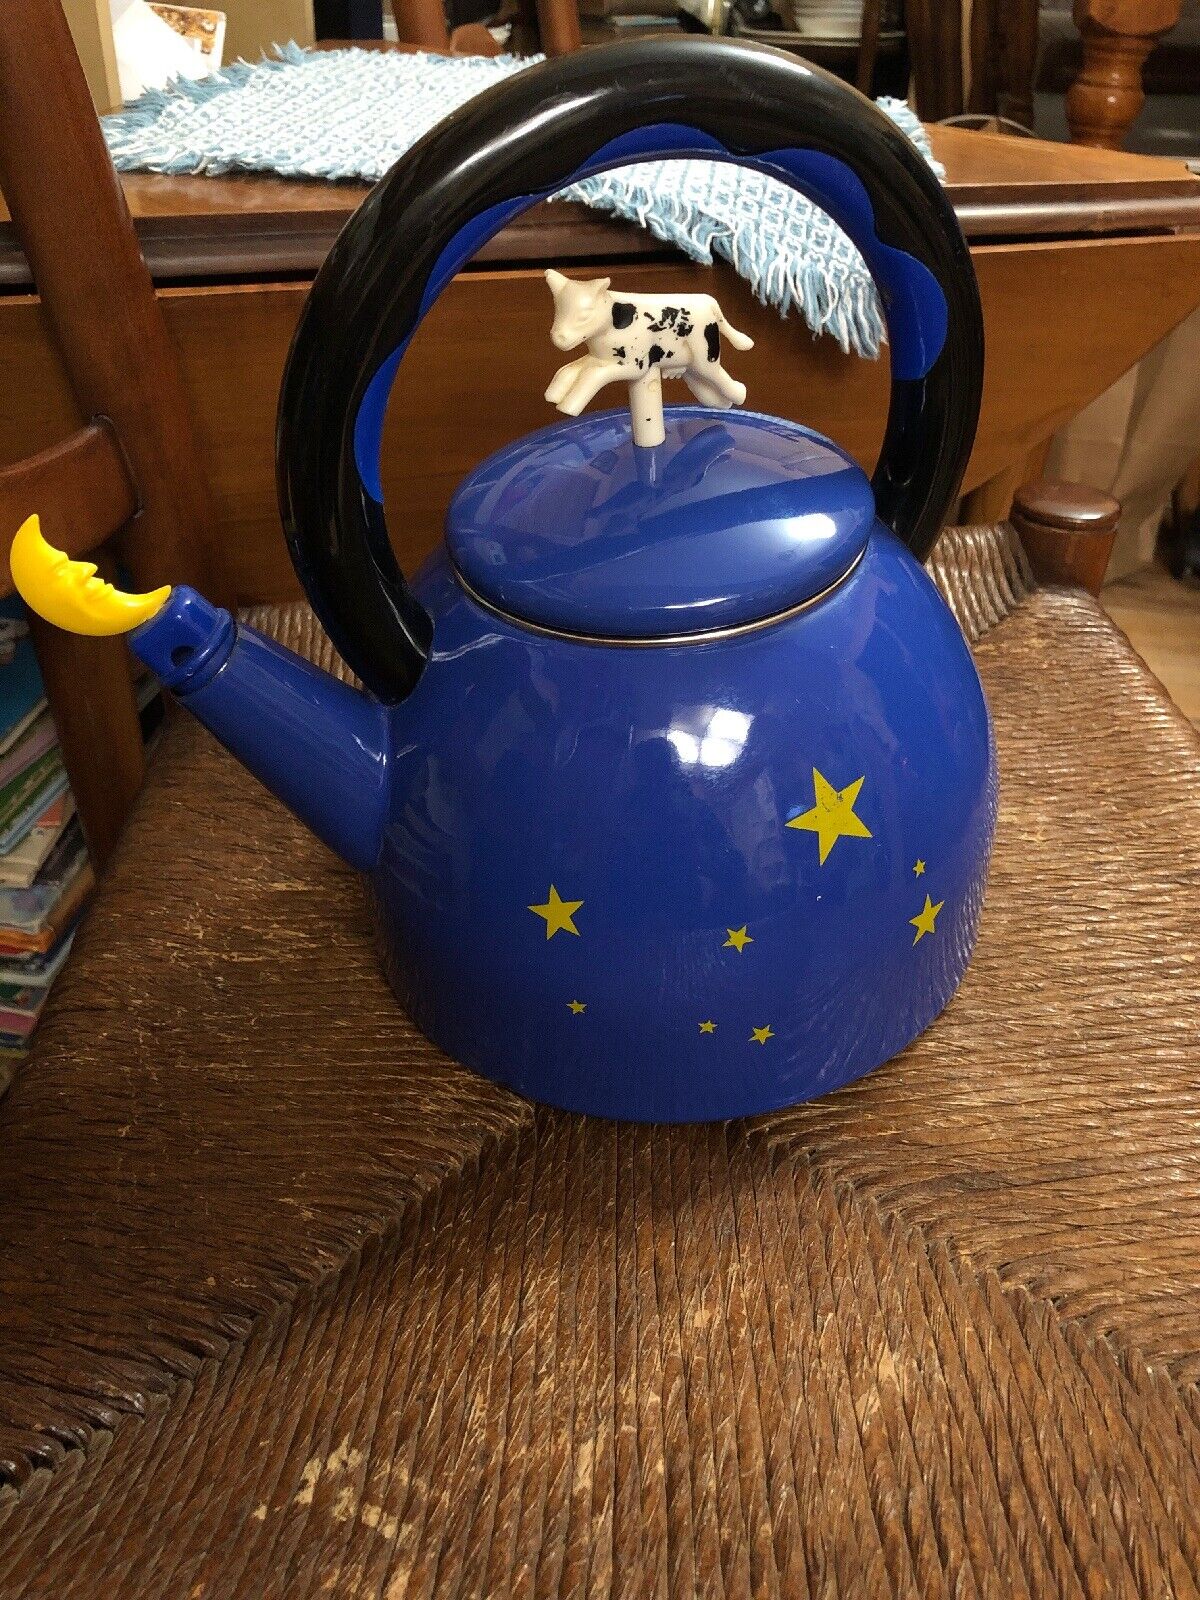 kamenstein Teapot  kettle Moon  porcelain enamel over Tea vintage Blue Moon Star Popularna, klasyczna popularność